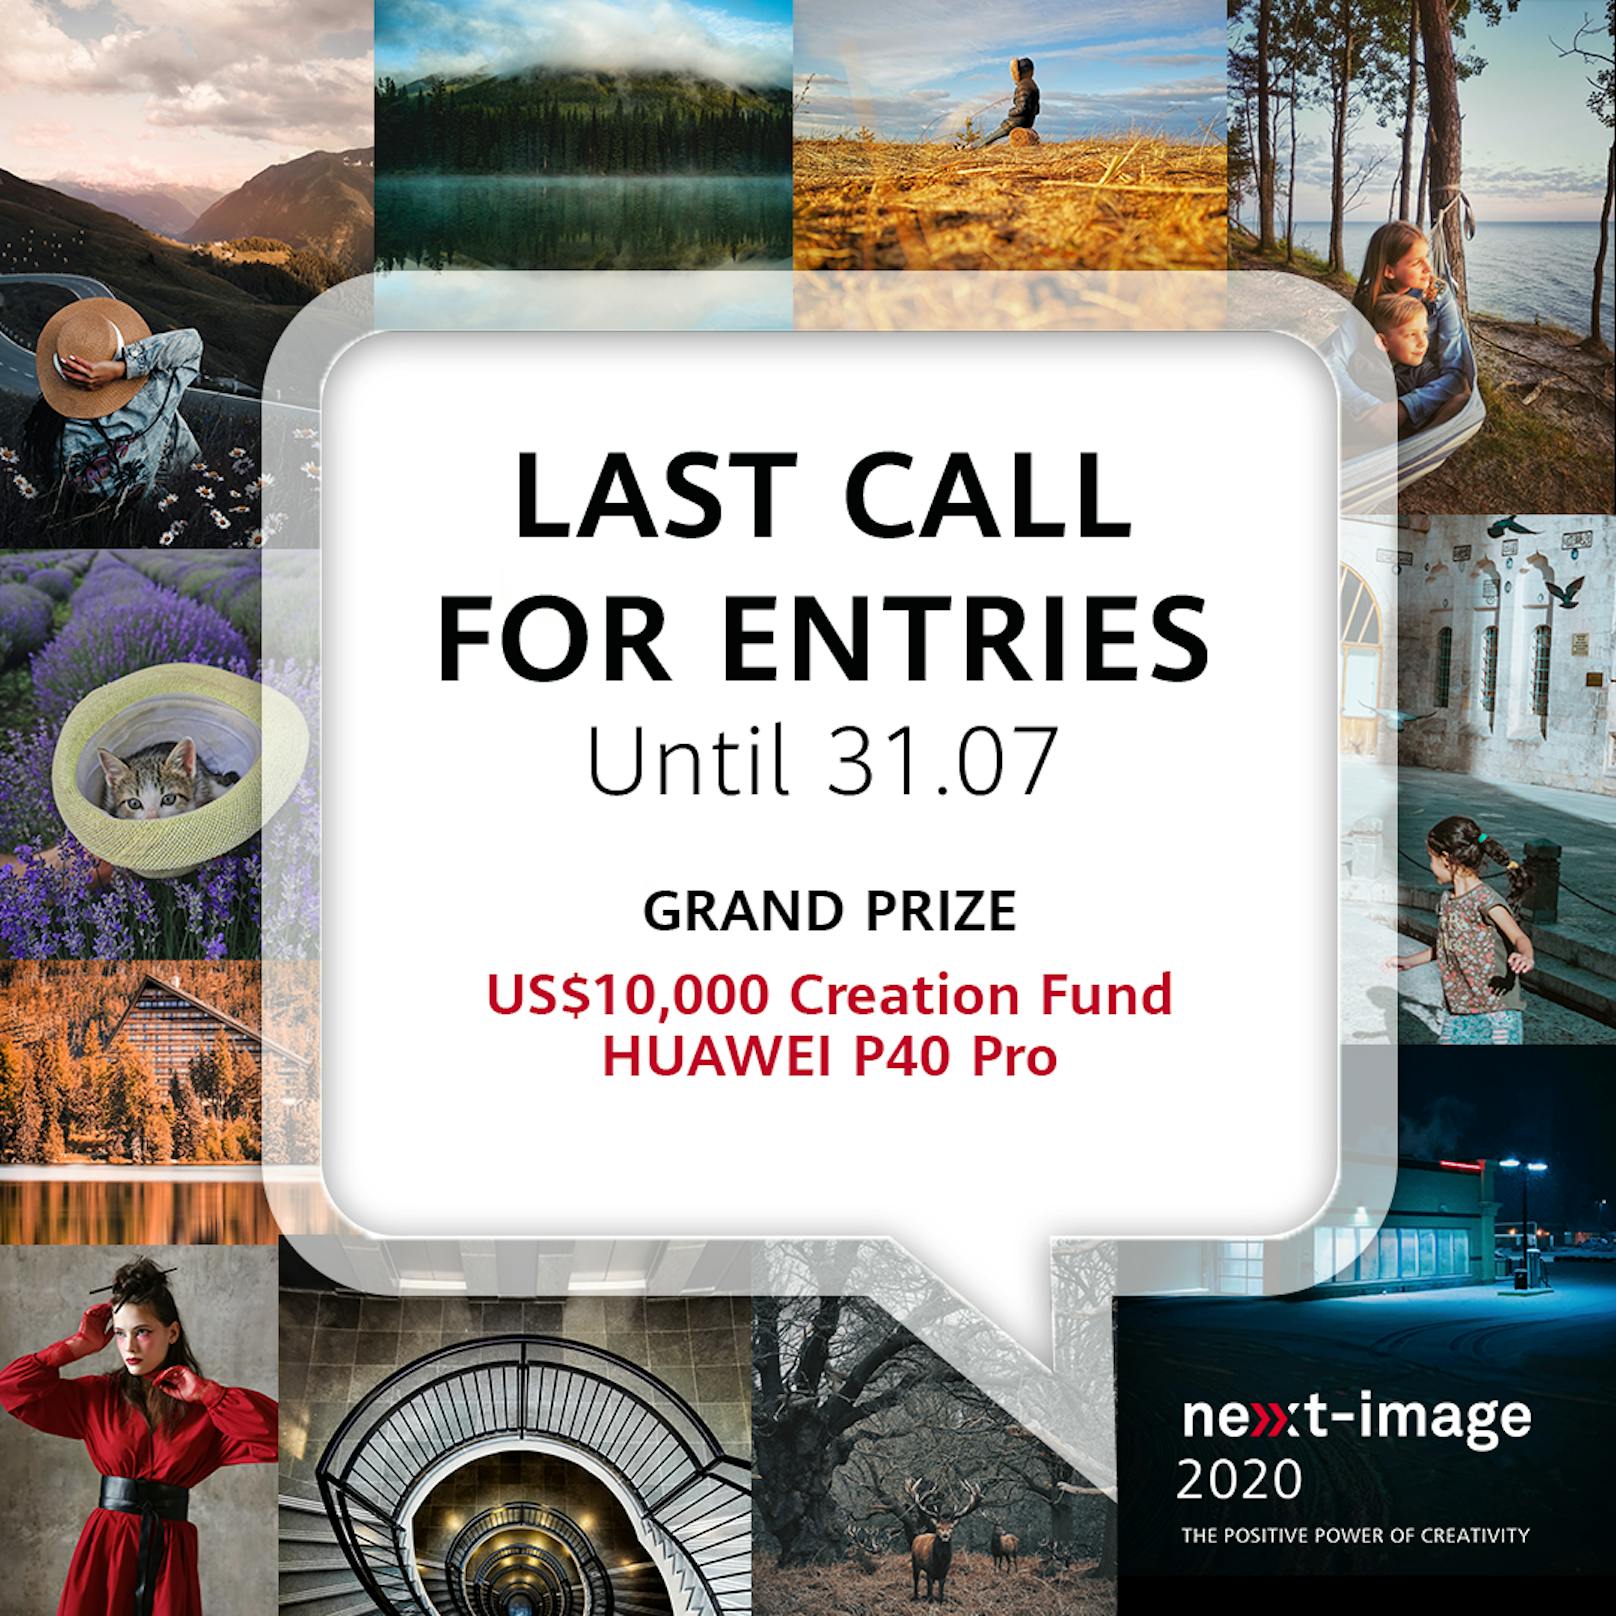 Huawei Next-Image Award 2020 - Letzte Chance zur Teilnahme.